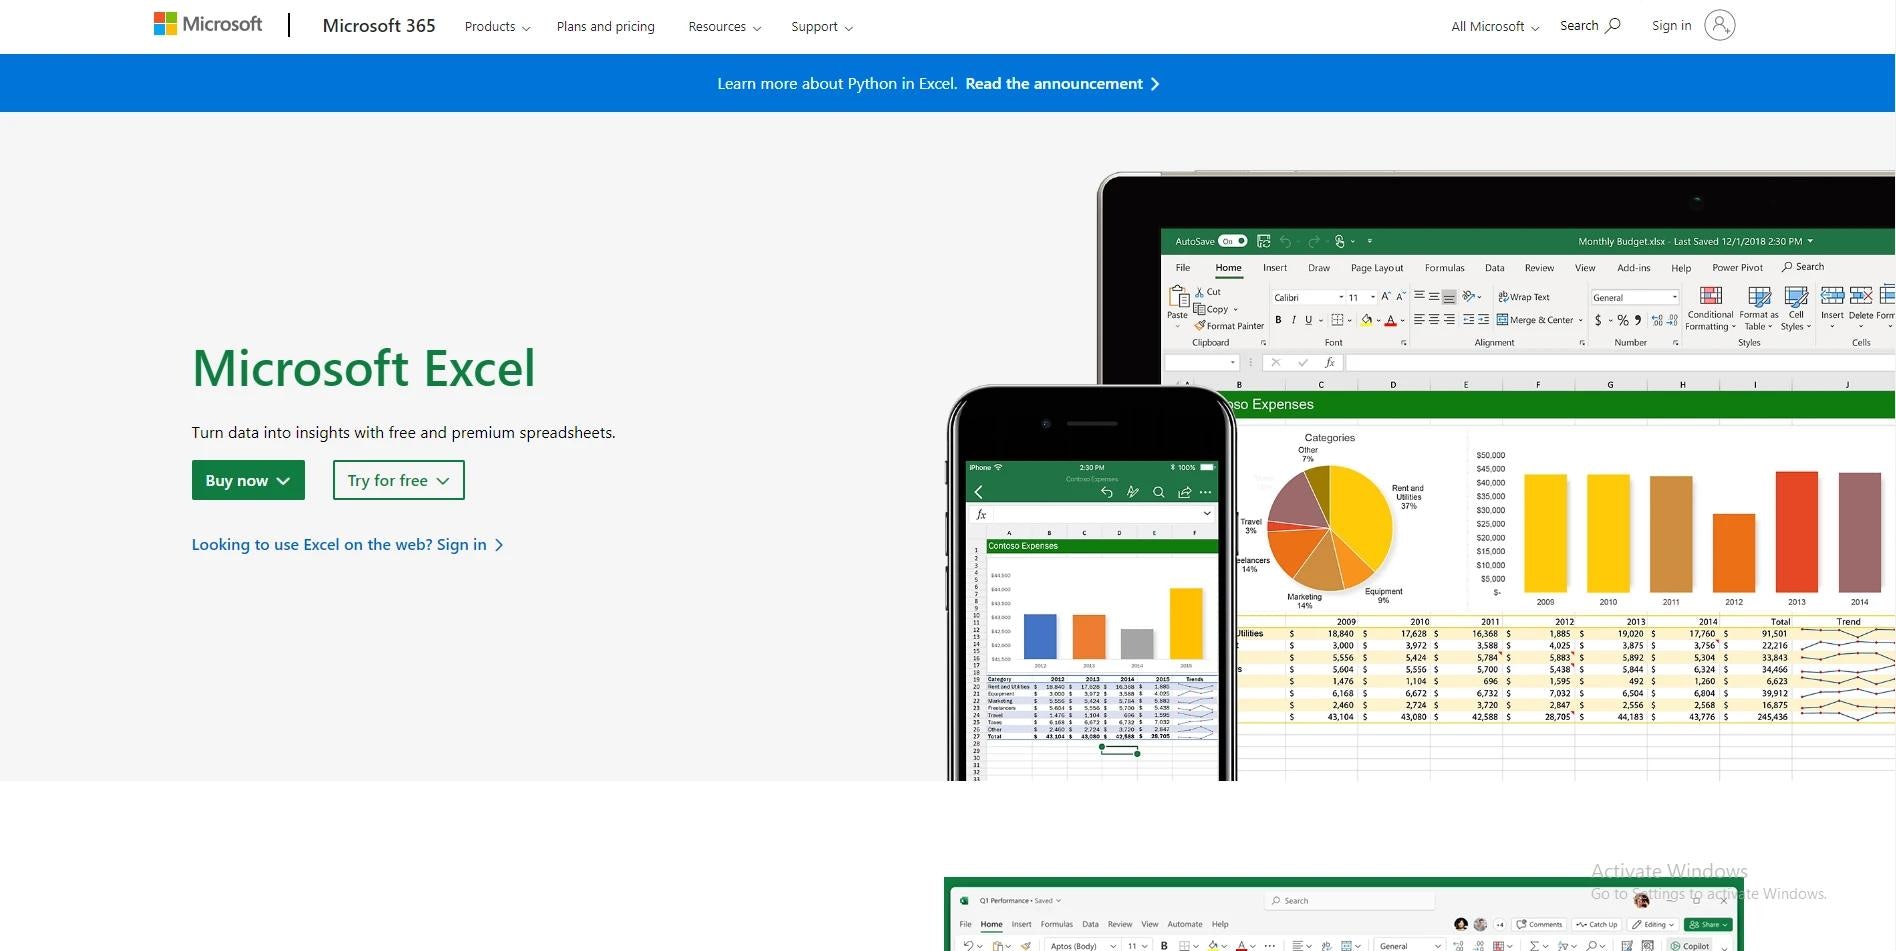 Microsoft Excel data analytics tool